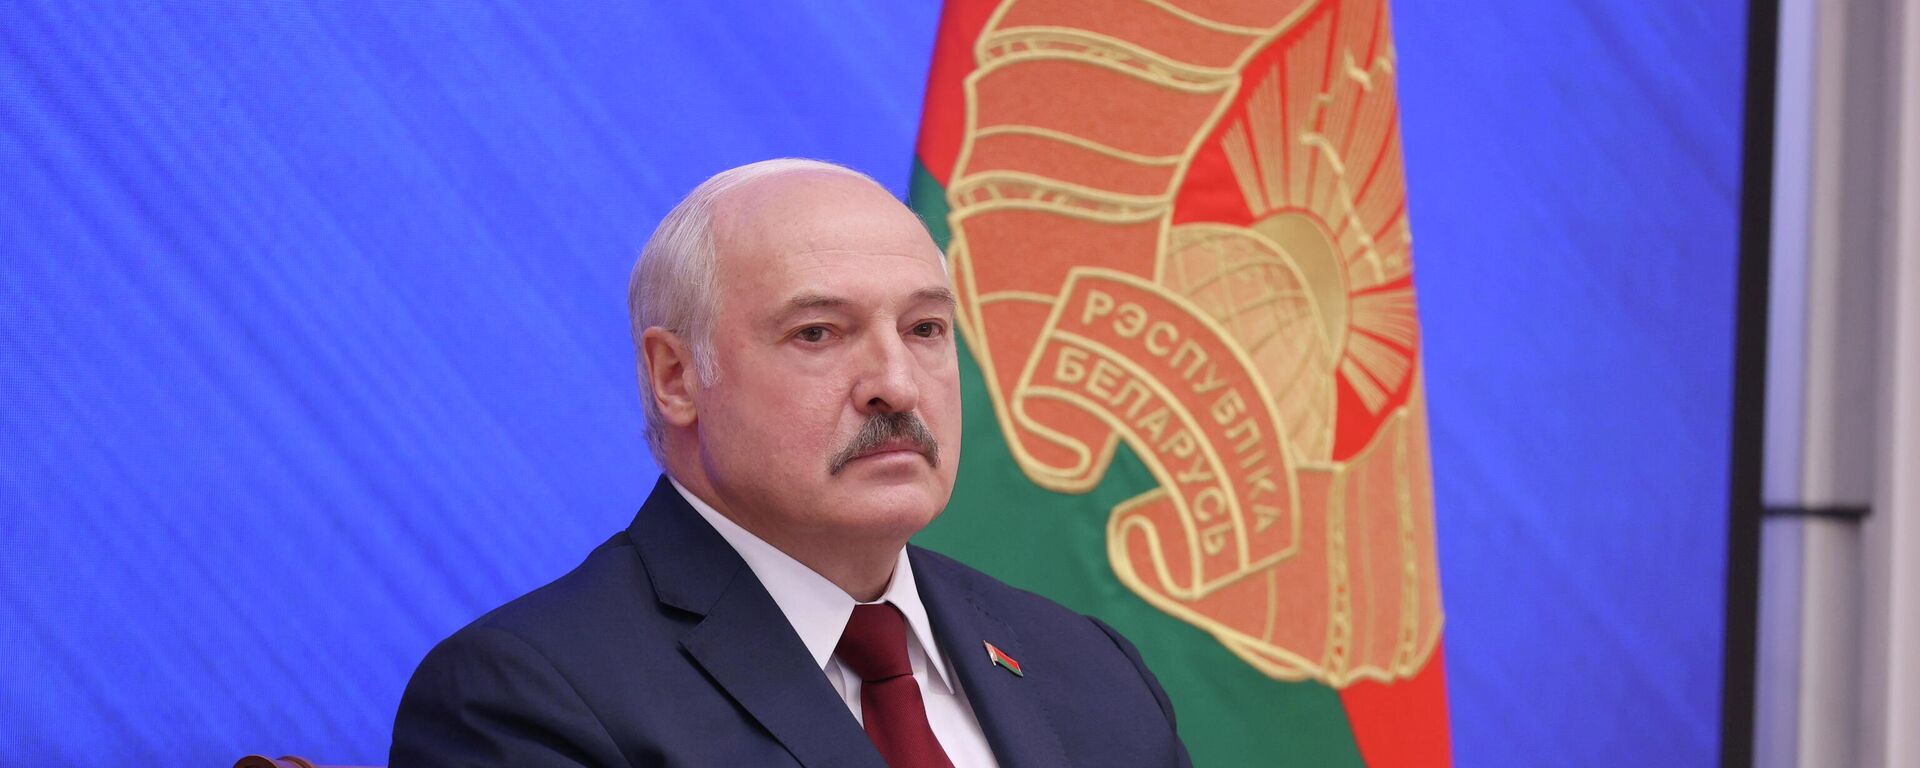 El presidente de Bielorrusia, Alexandr Lukashenko, sostiene rueda de prensa, el 9 de agosto de 2021 - Sputnik Mundo, 1920, 10.08.2021